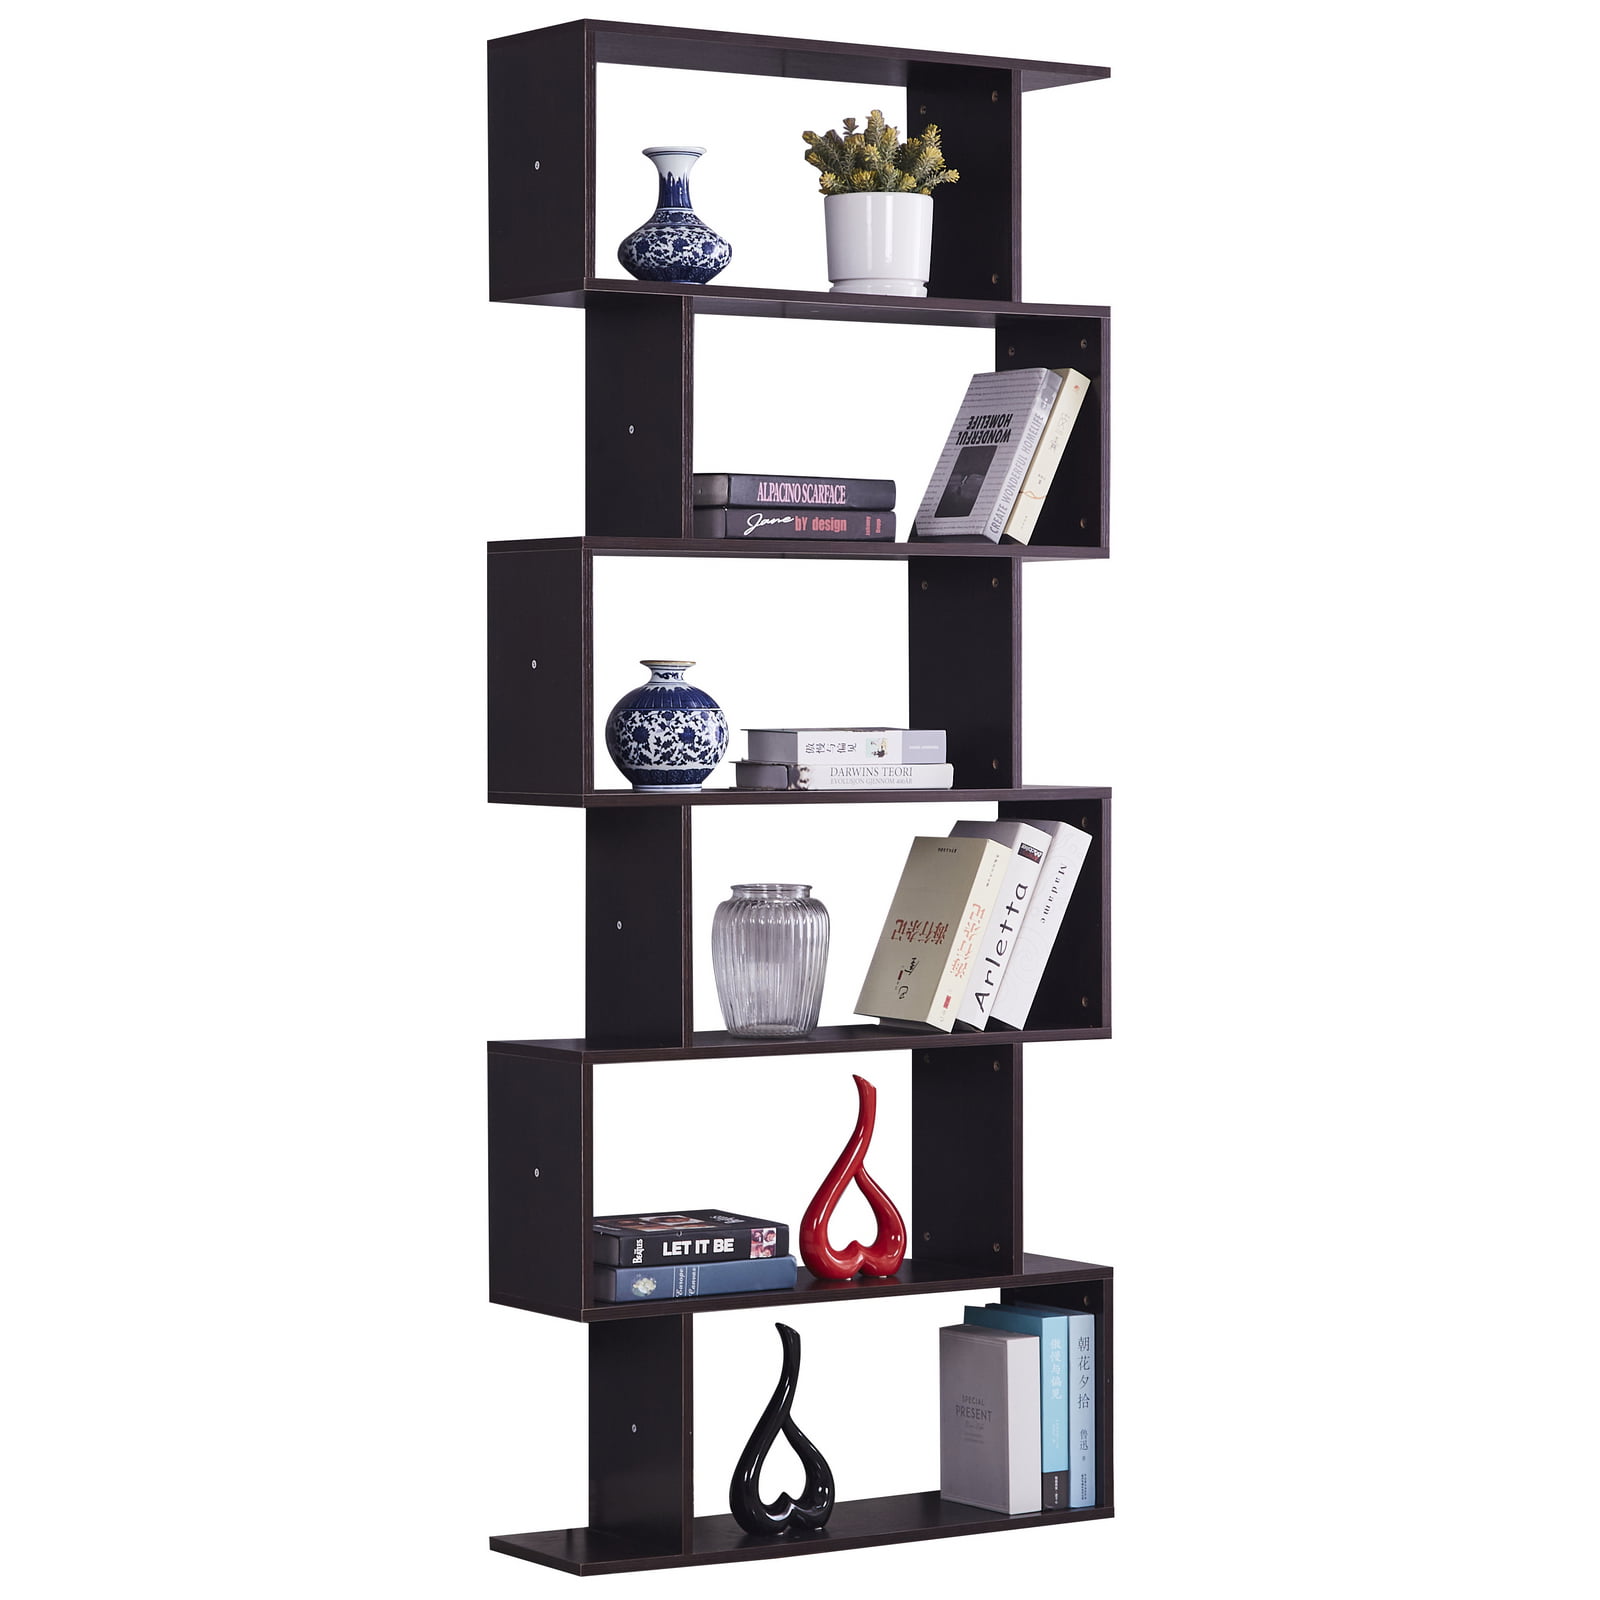 HOMCOM 75"H Bookcase 6 Shelf S-Shaped Bookshelf Storage Display Stand Organizer 